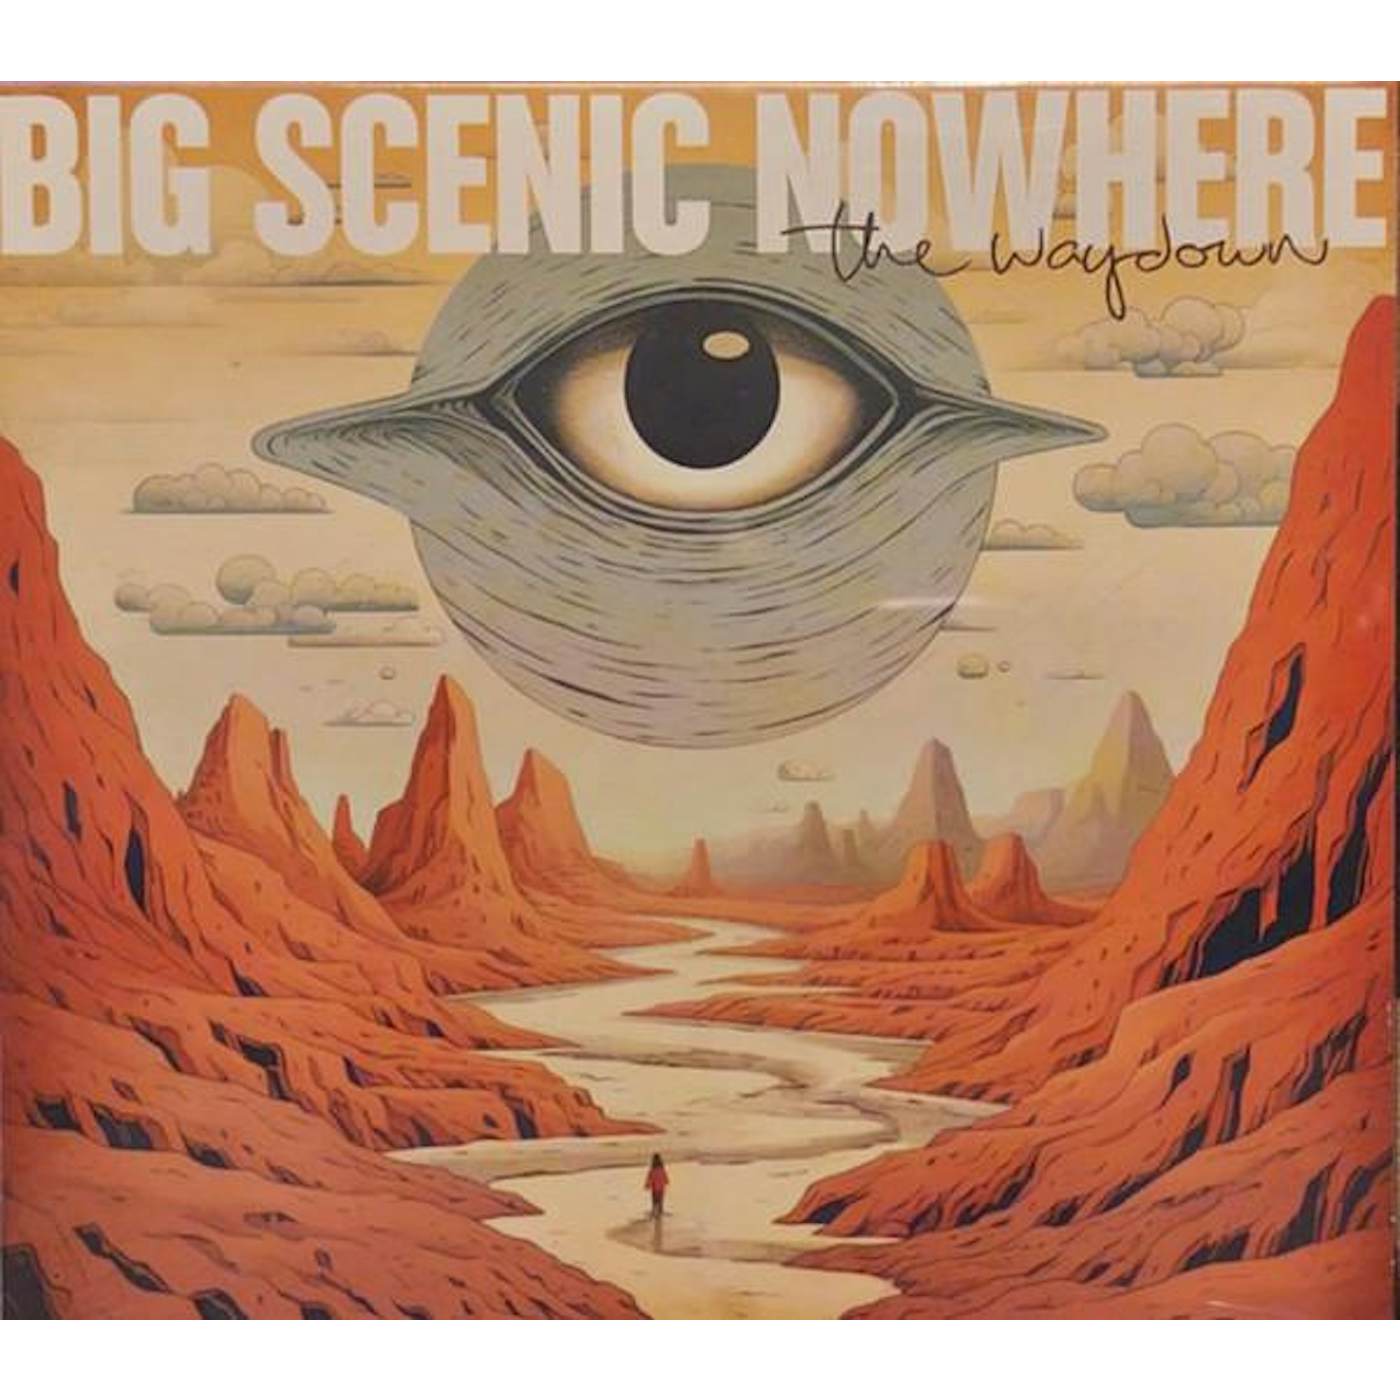 Big Scenic Nowhere Waydown Vinyl Record